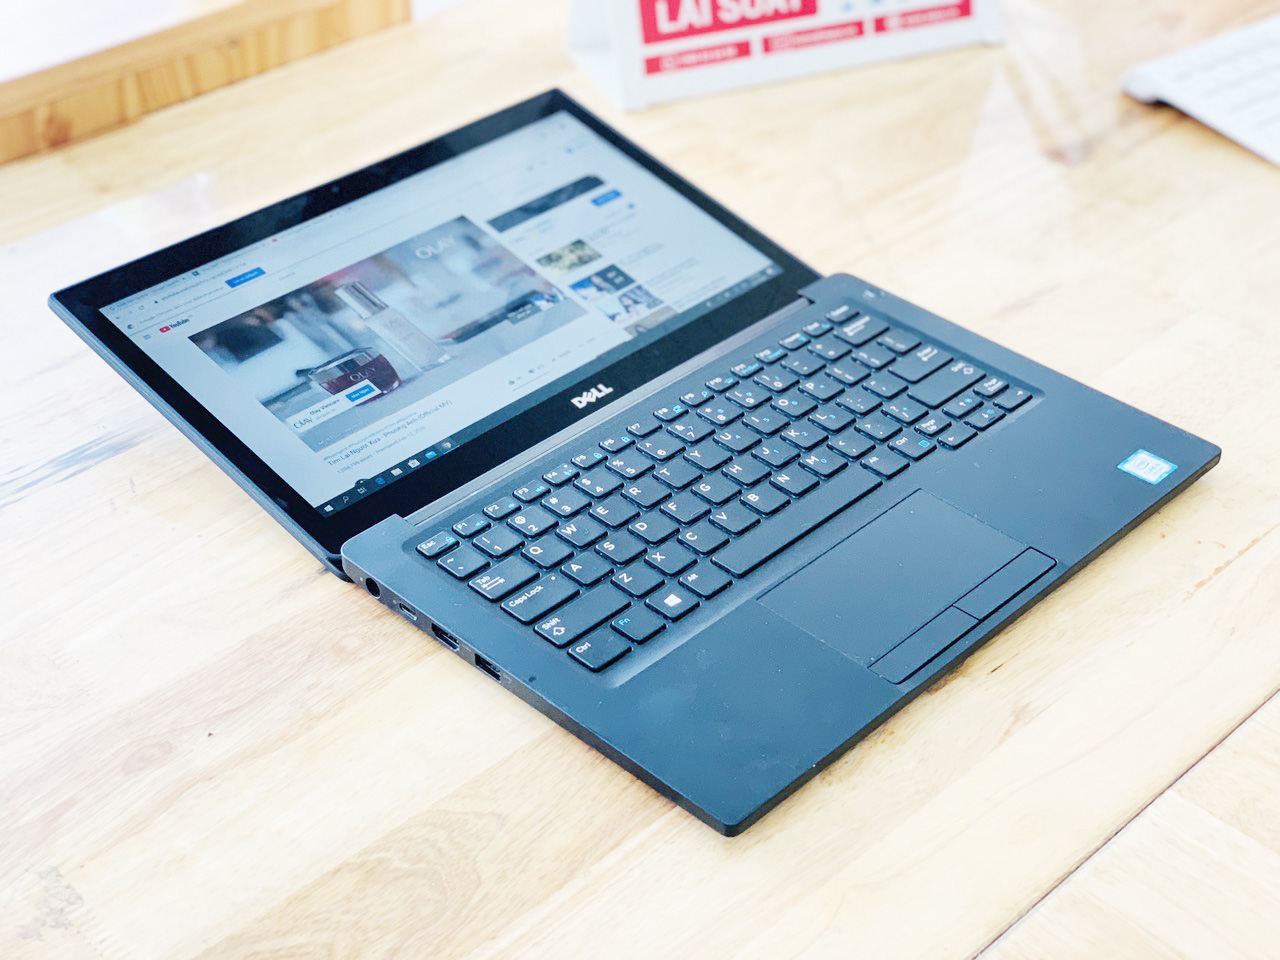 Laptop Dell Latitude E7280 i5-7300U Ram  8G SSD 256G 12.5 inch Cảm Ứng Full HD